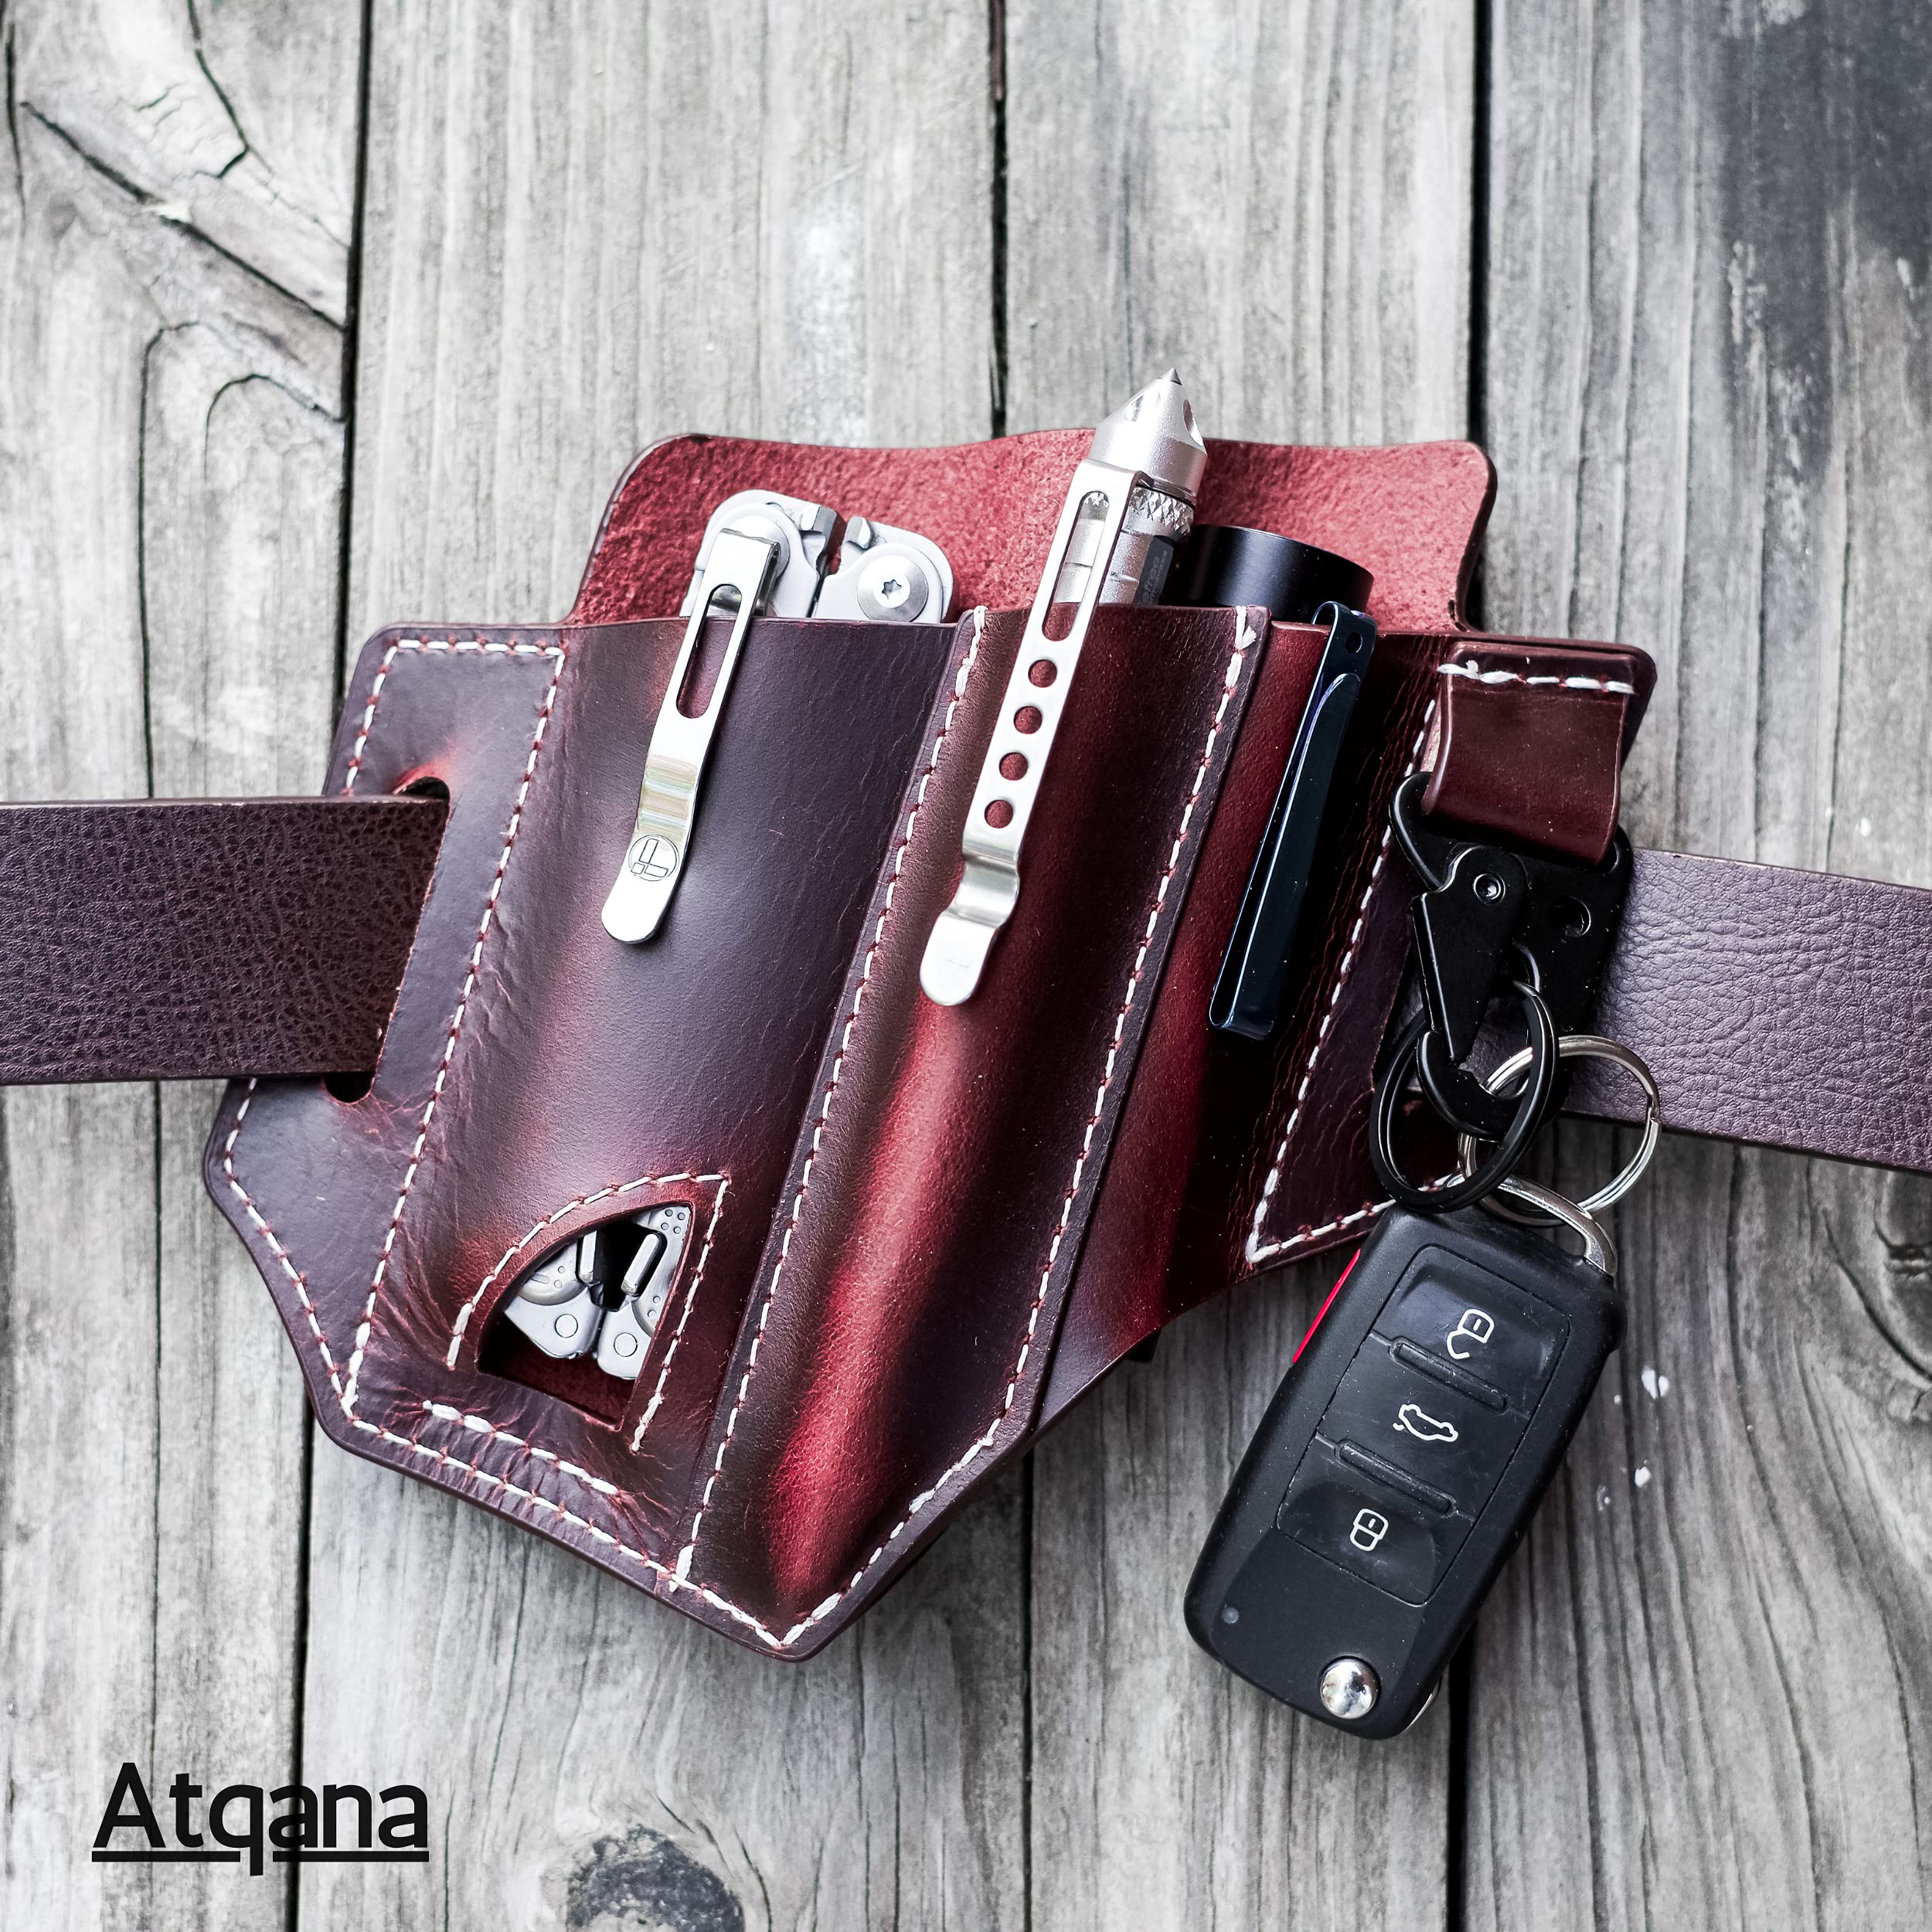 Atqana Multitool Sheath for Belt (Premium Leather) - EDC Pocket Organizer | Leatherman Holster | Handmade Leather Multitool Pouch with Pen Holder, Flashlight Sheath and Key Fob Clip (Extra Dark Brown)